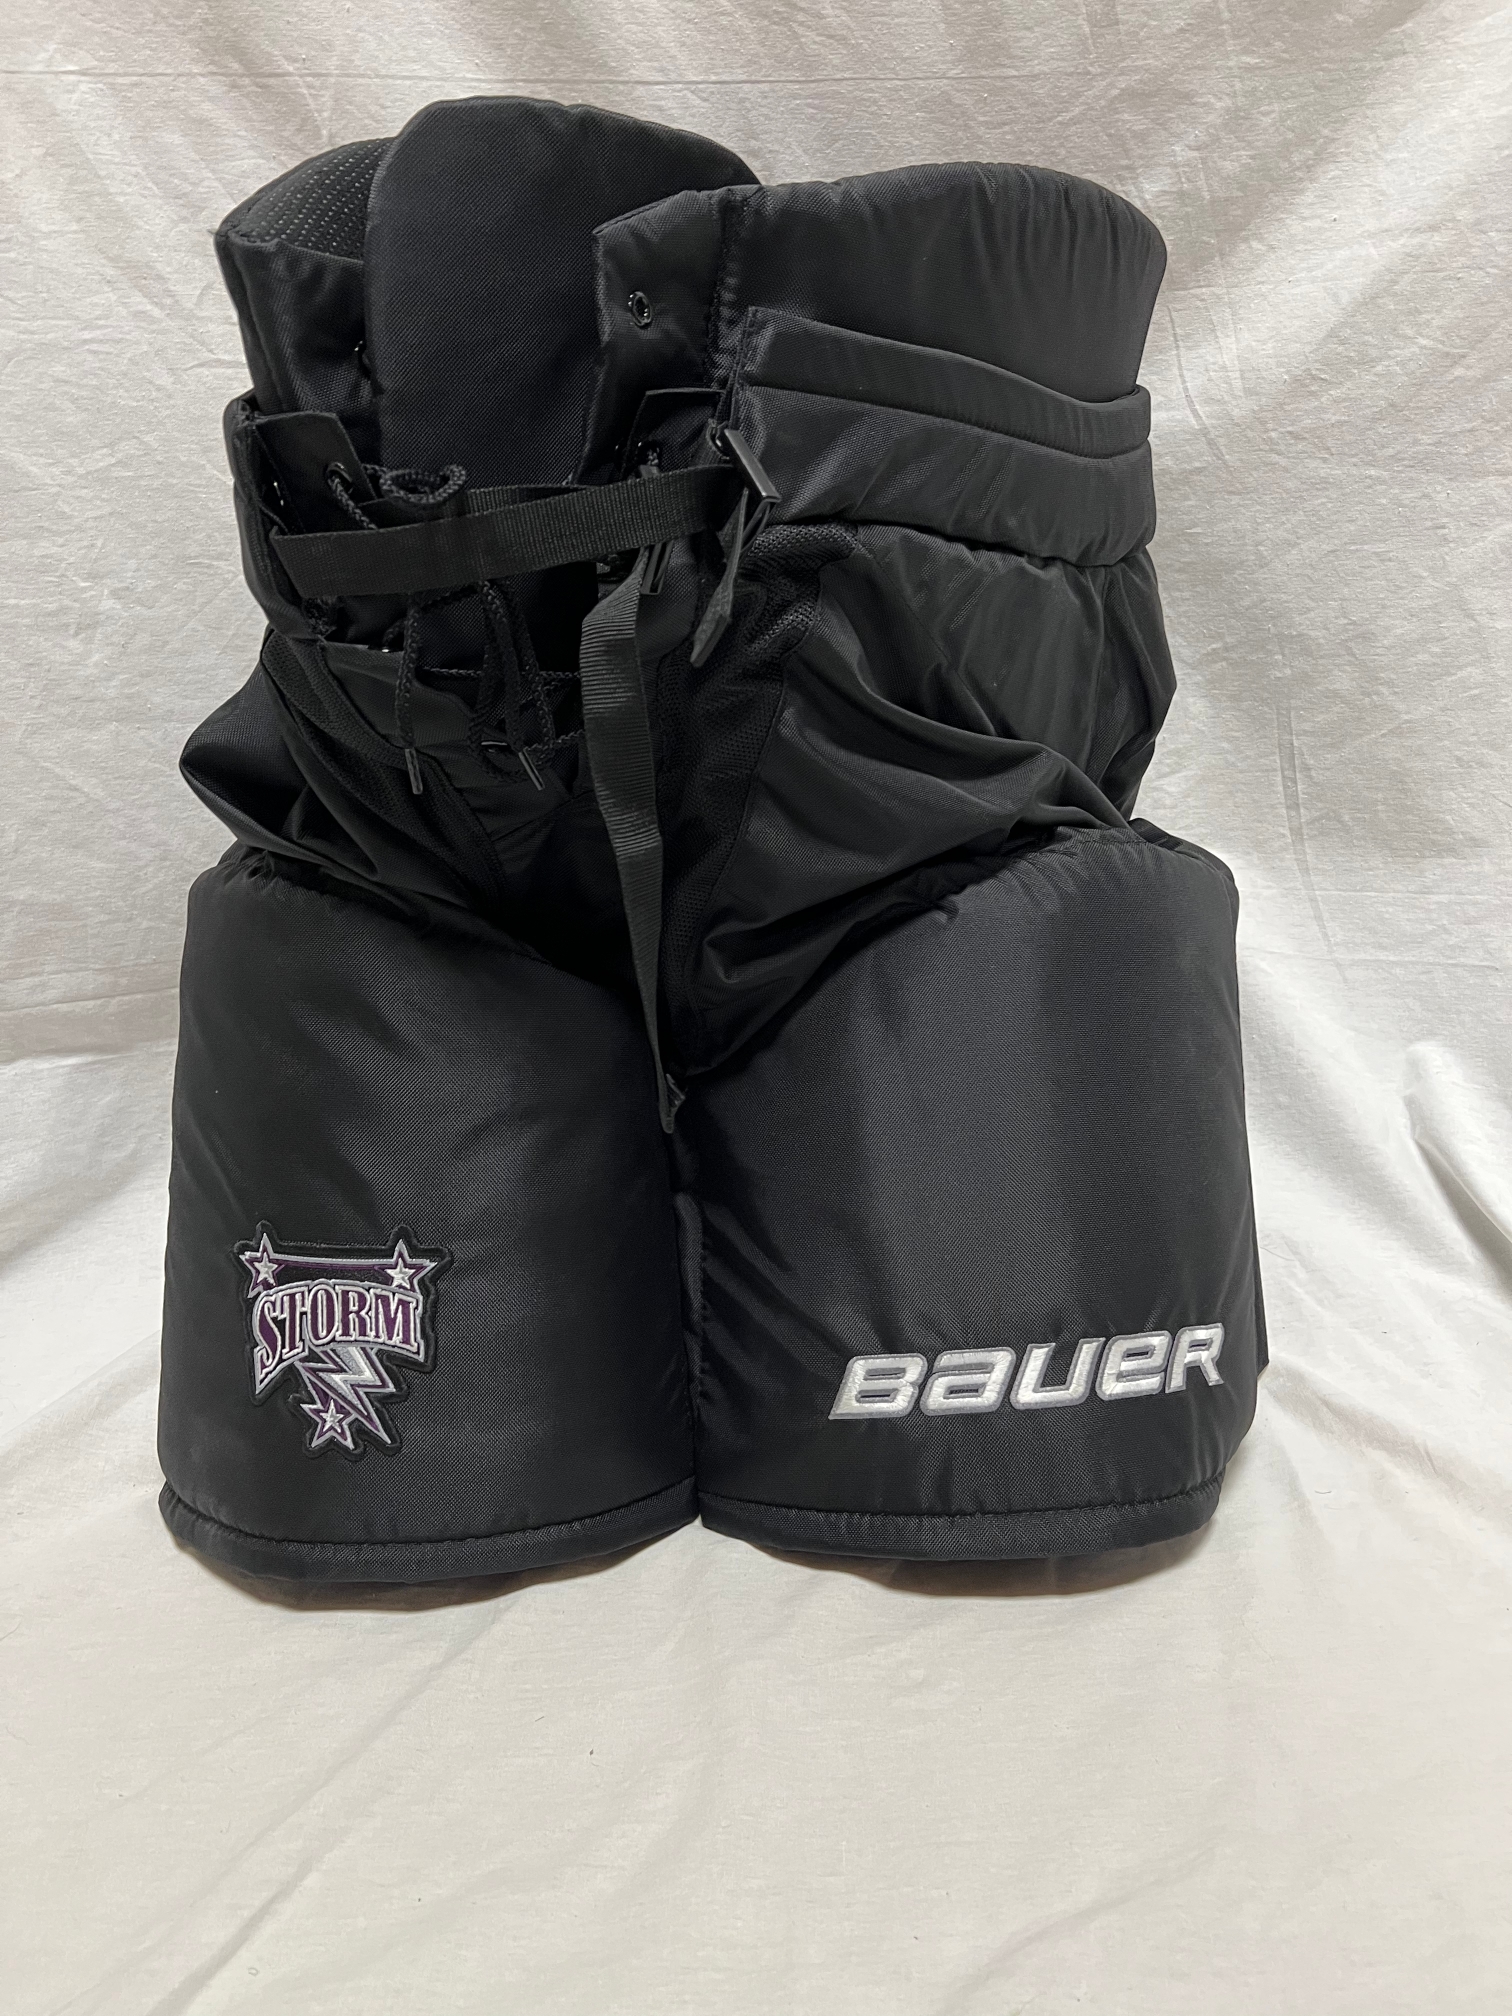 Senior New XL Bauer Hockey Pants Pro Stock